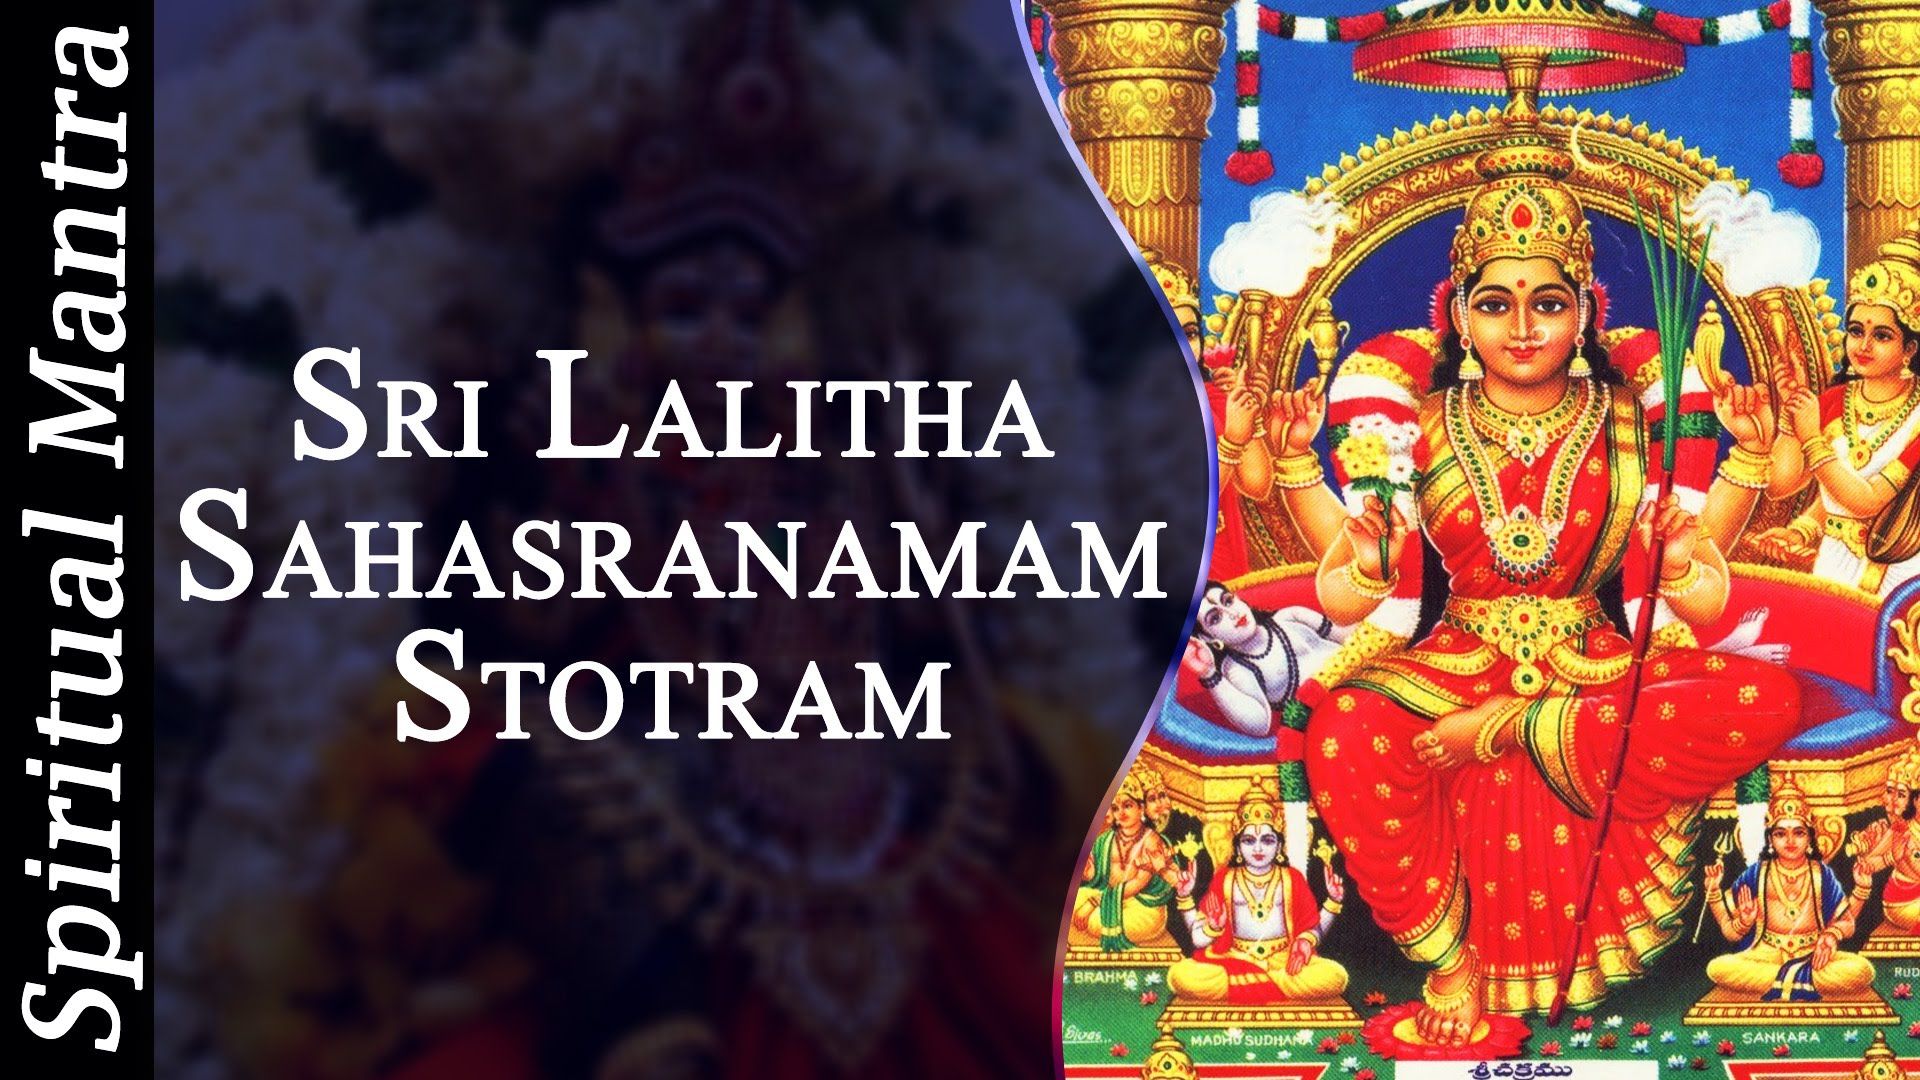 Sri Lalitha Sahasranama Sthotram Telugu TV SHOWS on Bhakthi TV.